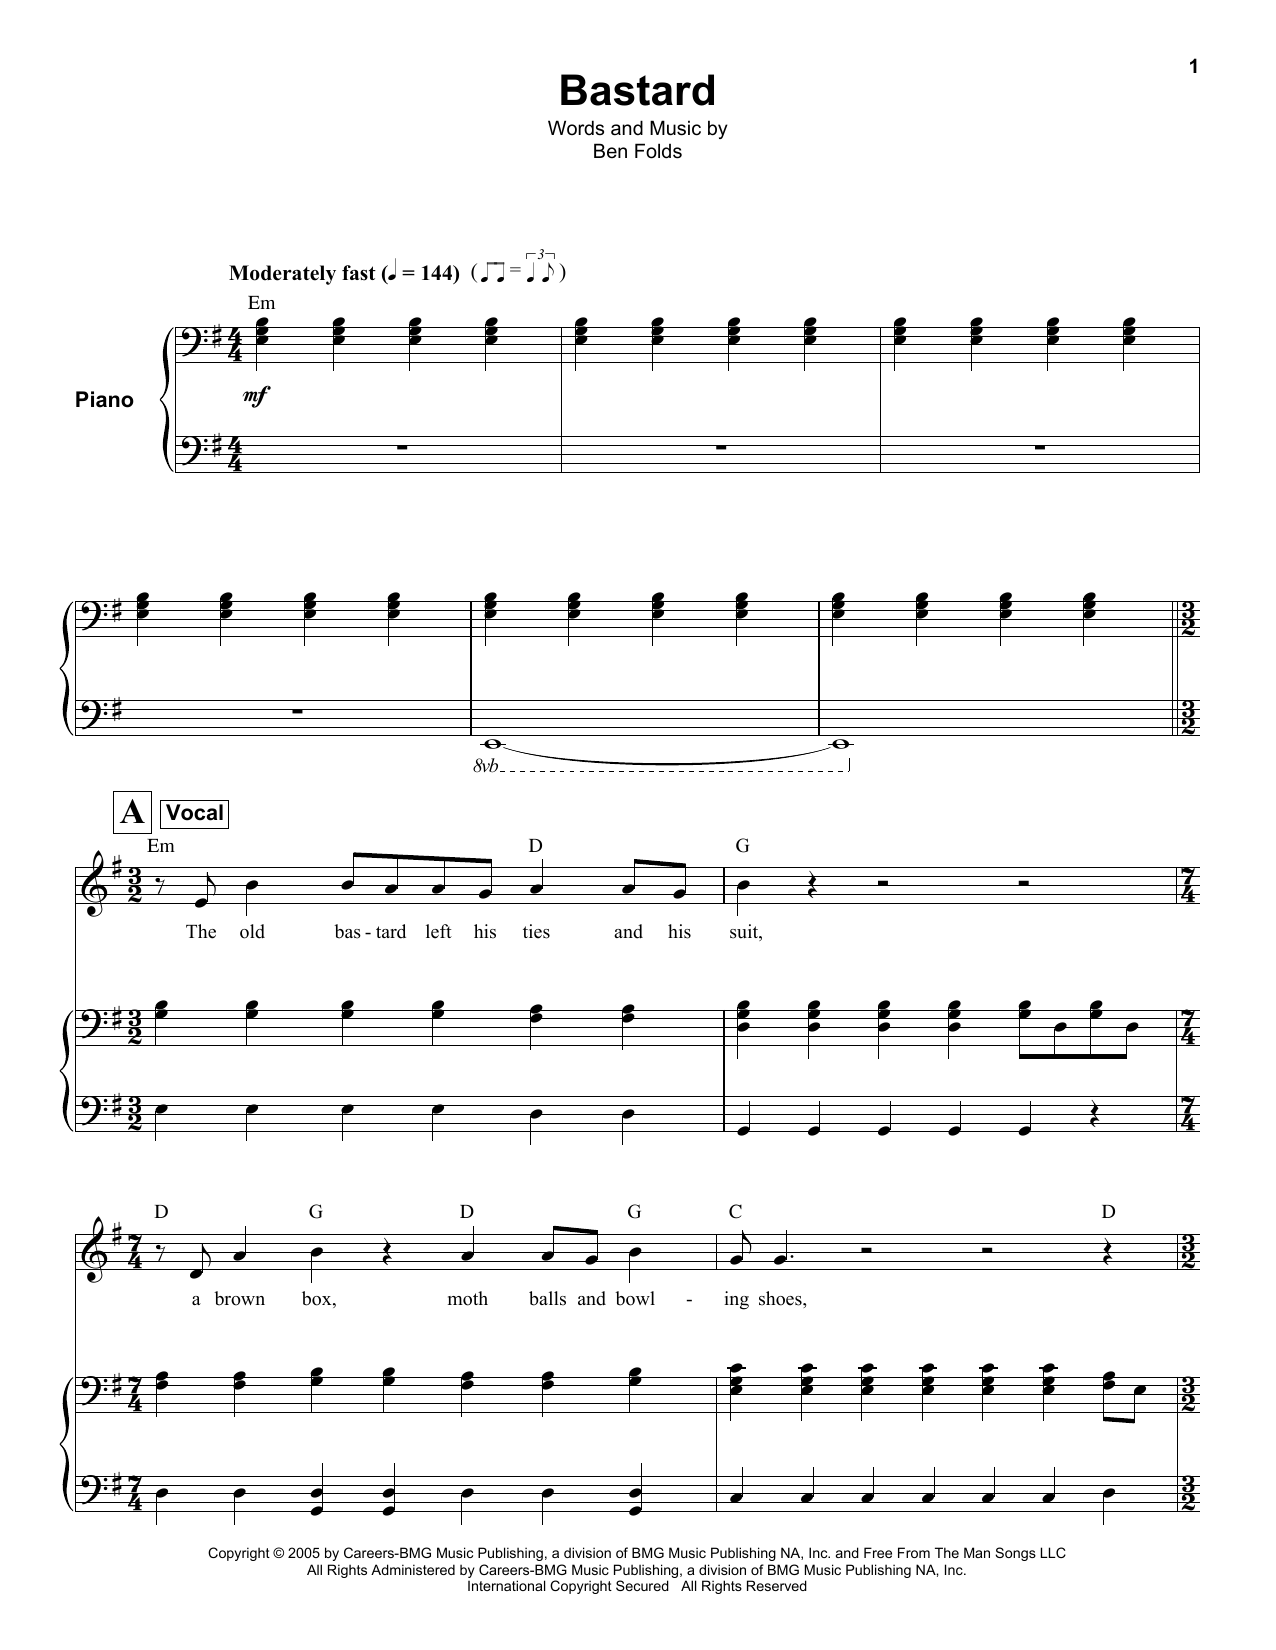 Ben Folds Bastard Sheet Music Notes & Chords for Keyboard Transcription - Download or Print PDF